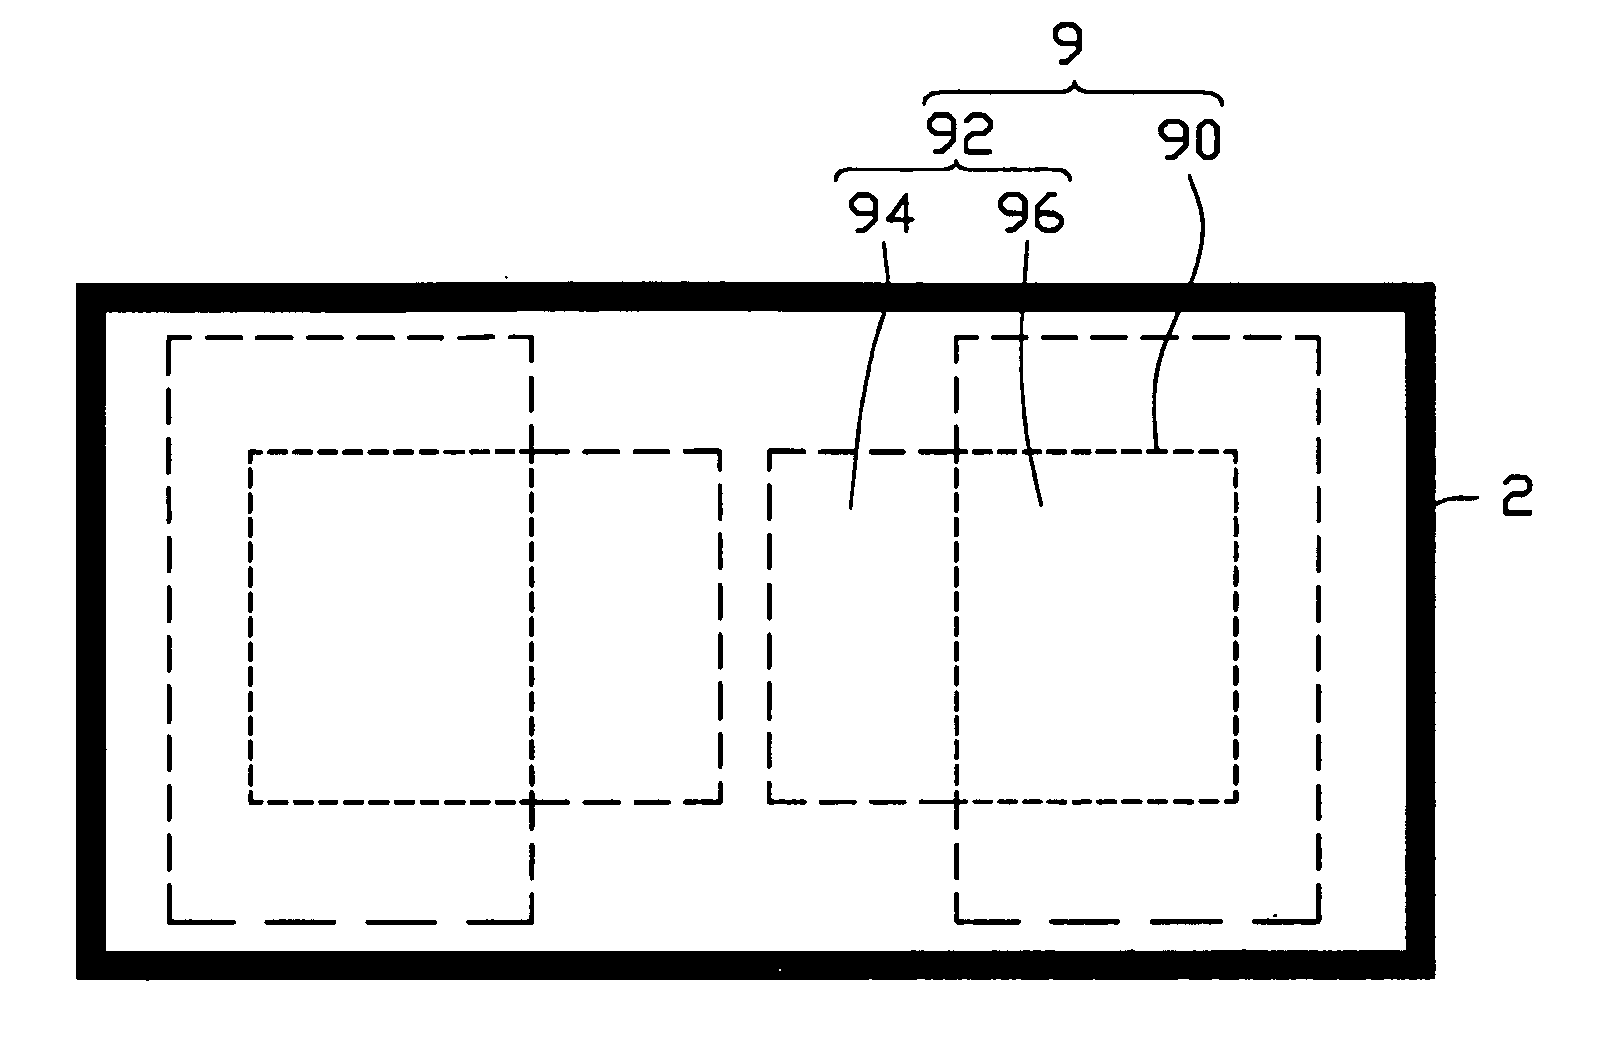 Pad layouts of a printed circuit board